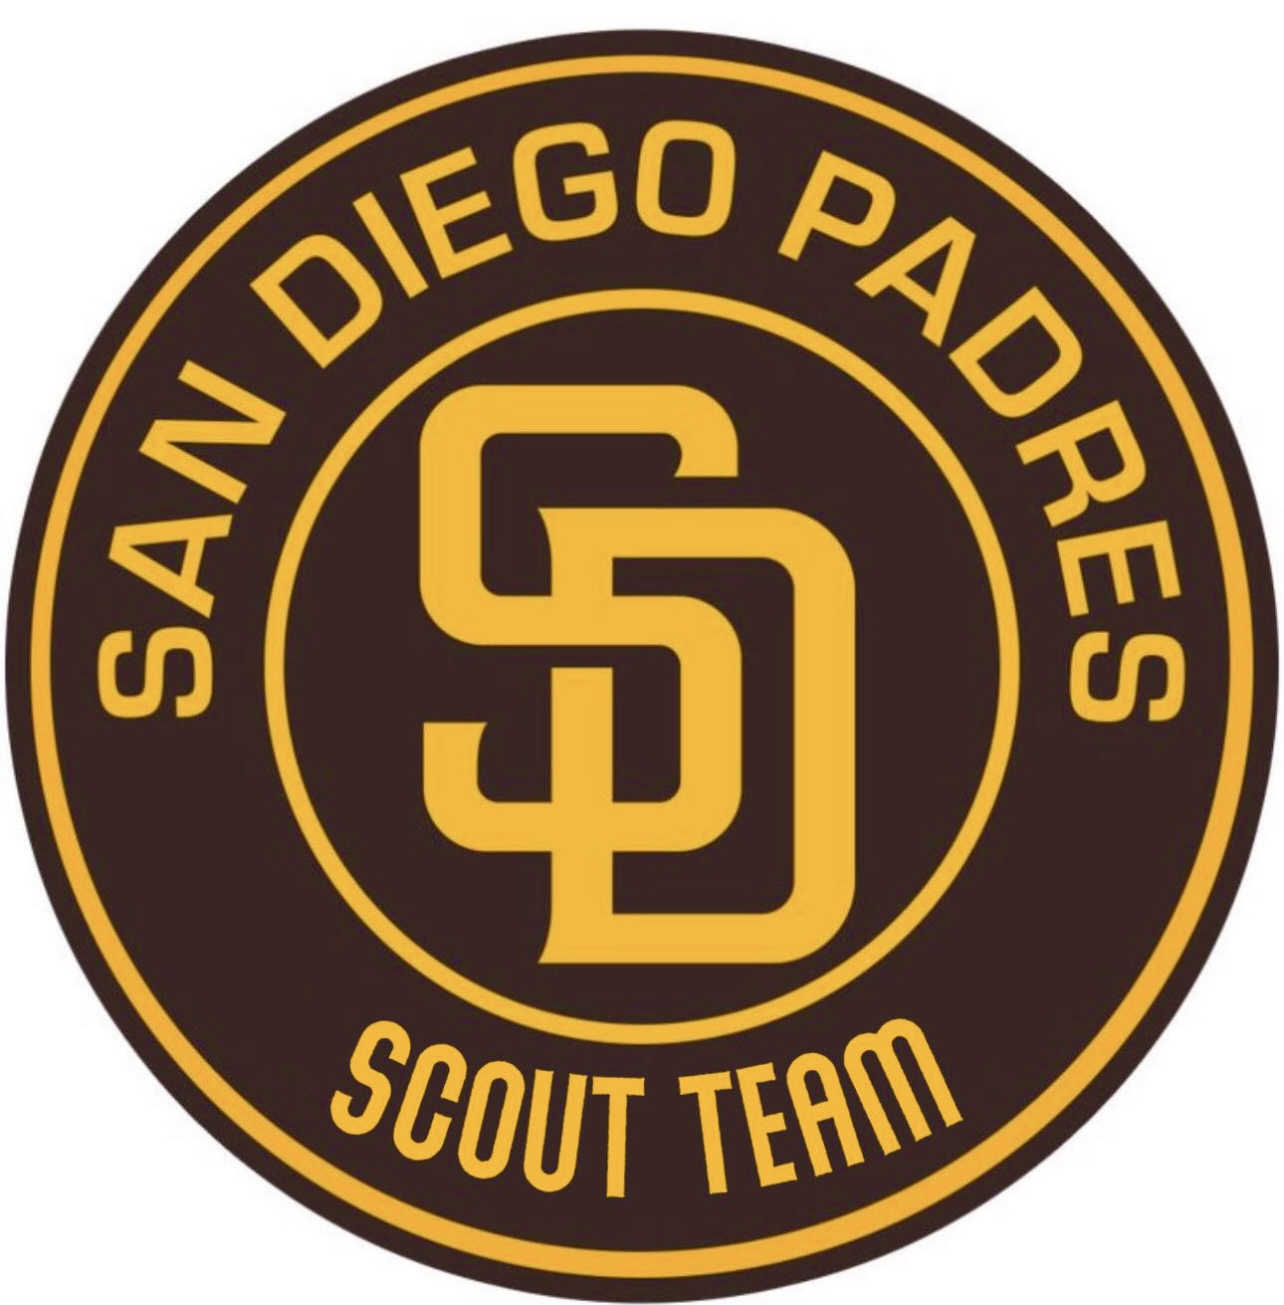 San Diego Padres Scout Team 16u - Perfect Game Baseball Association